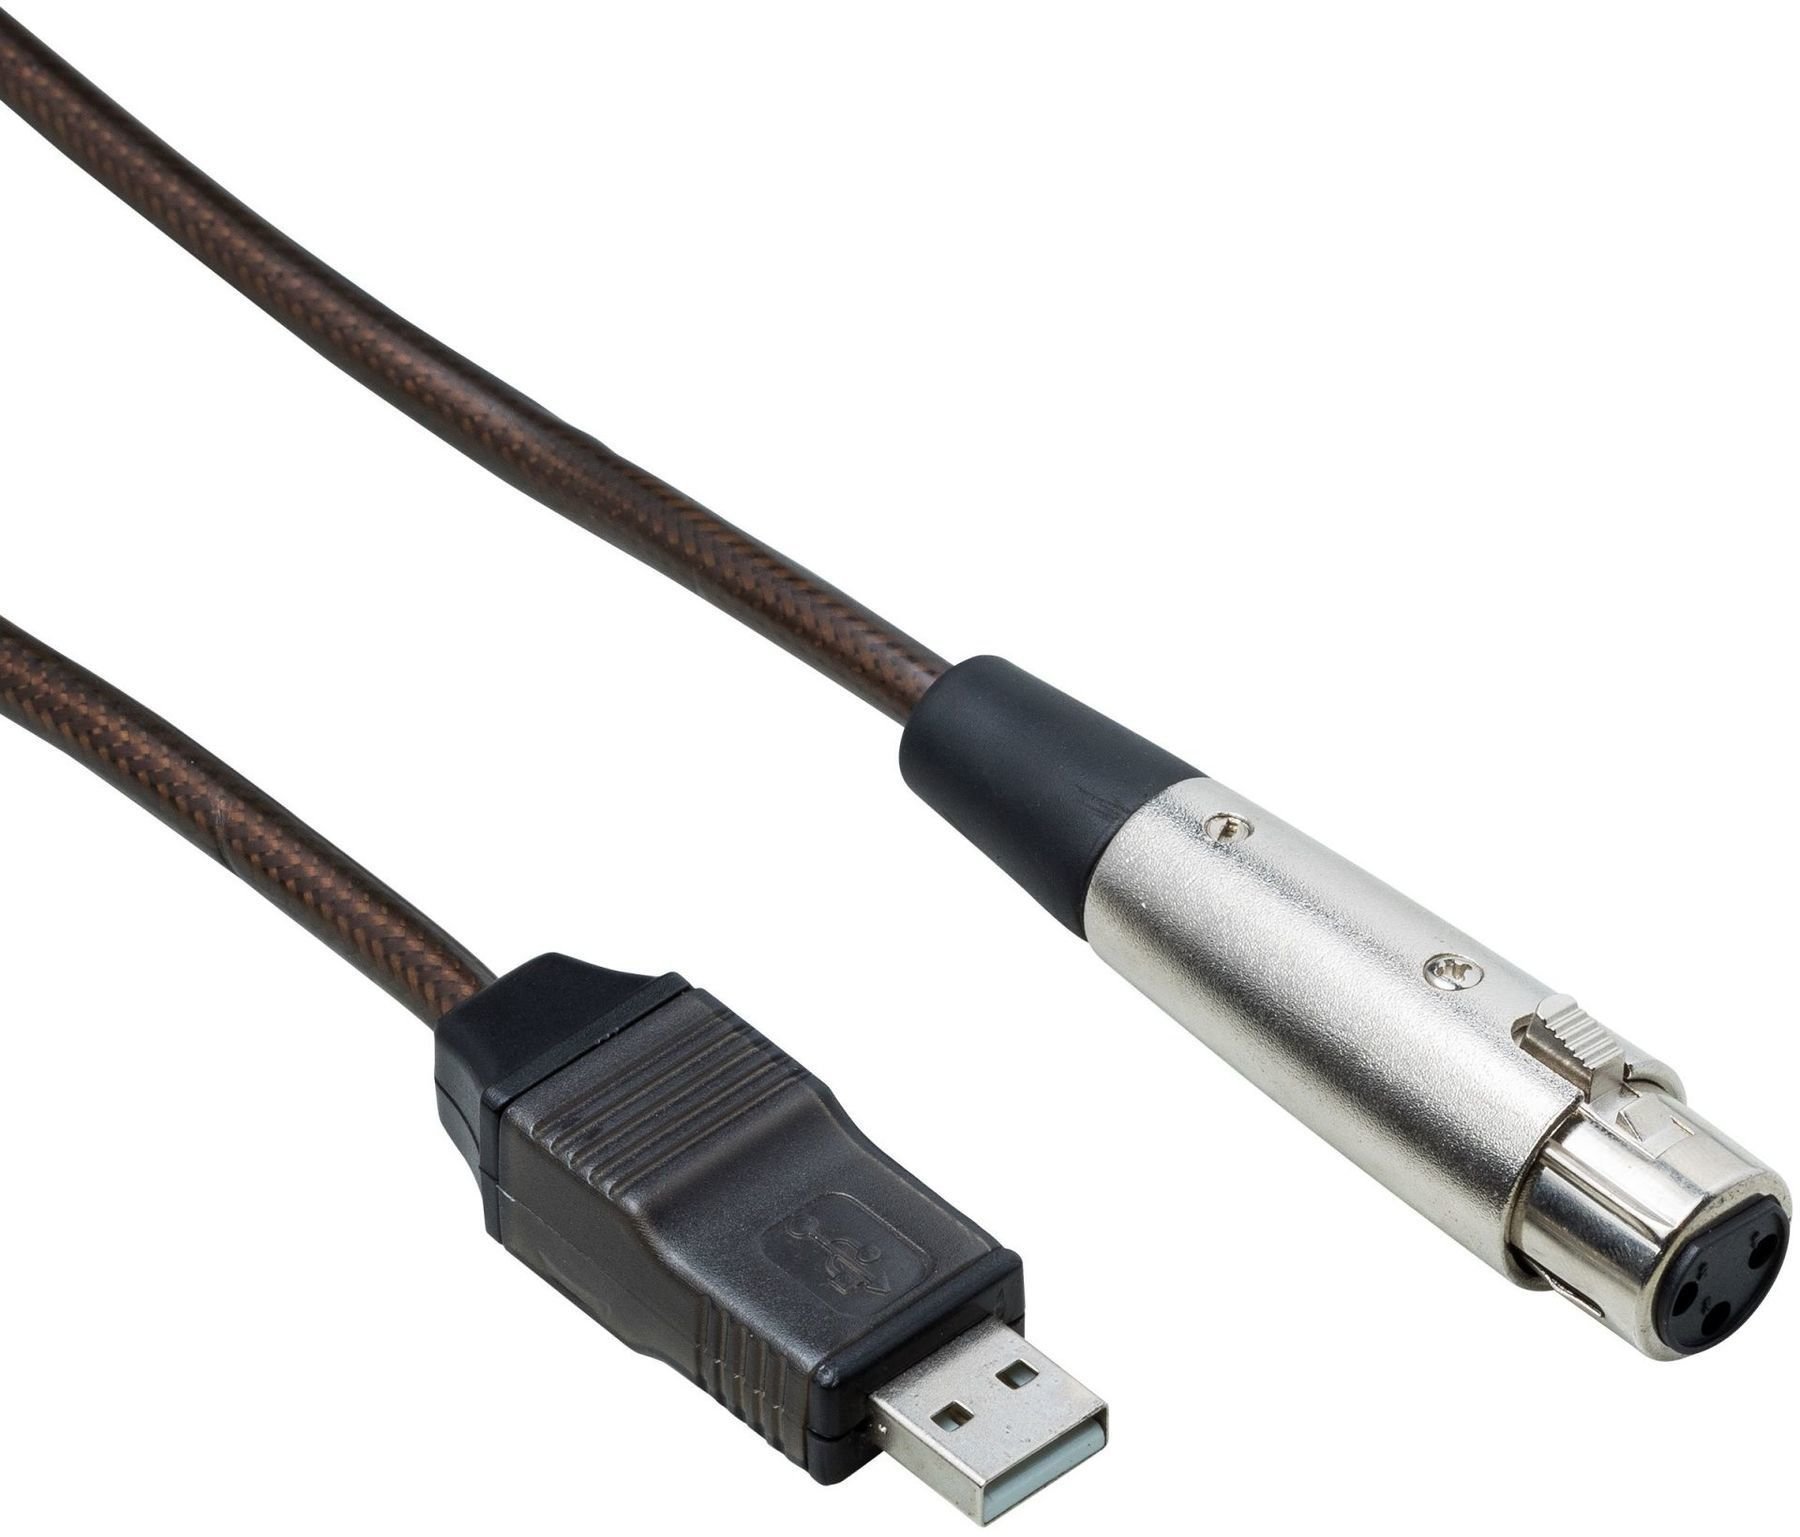 USB Kabel Bespeco BMUSB200 Braun 3 m USB Kabel